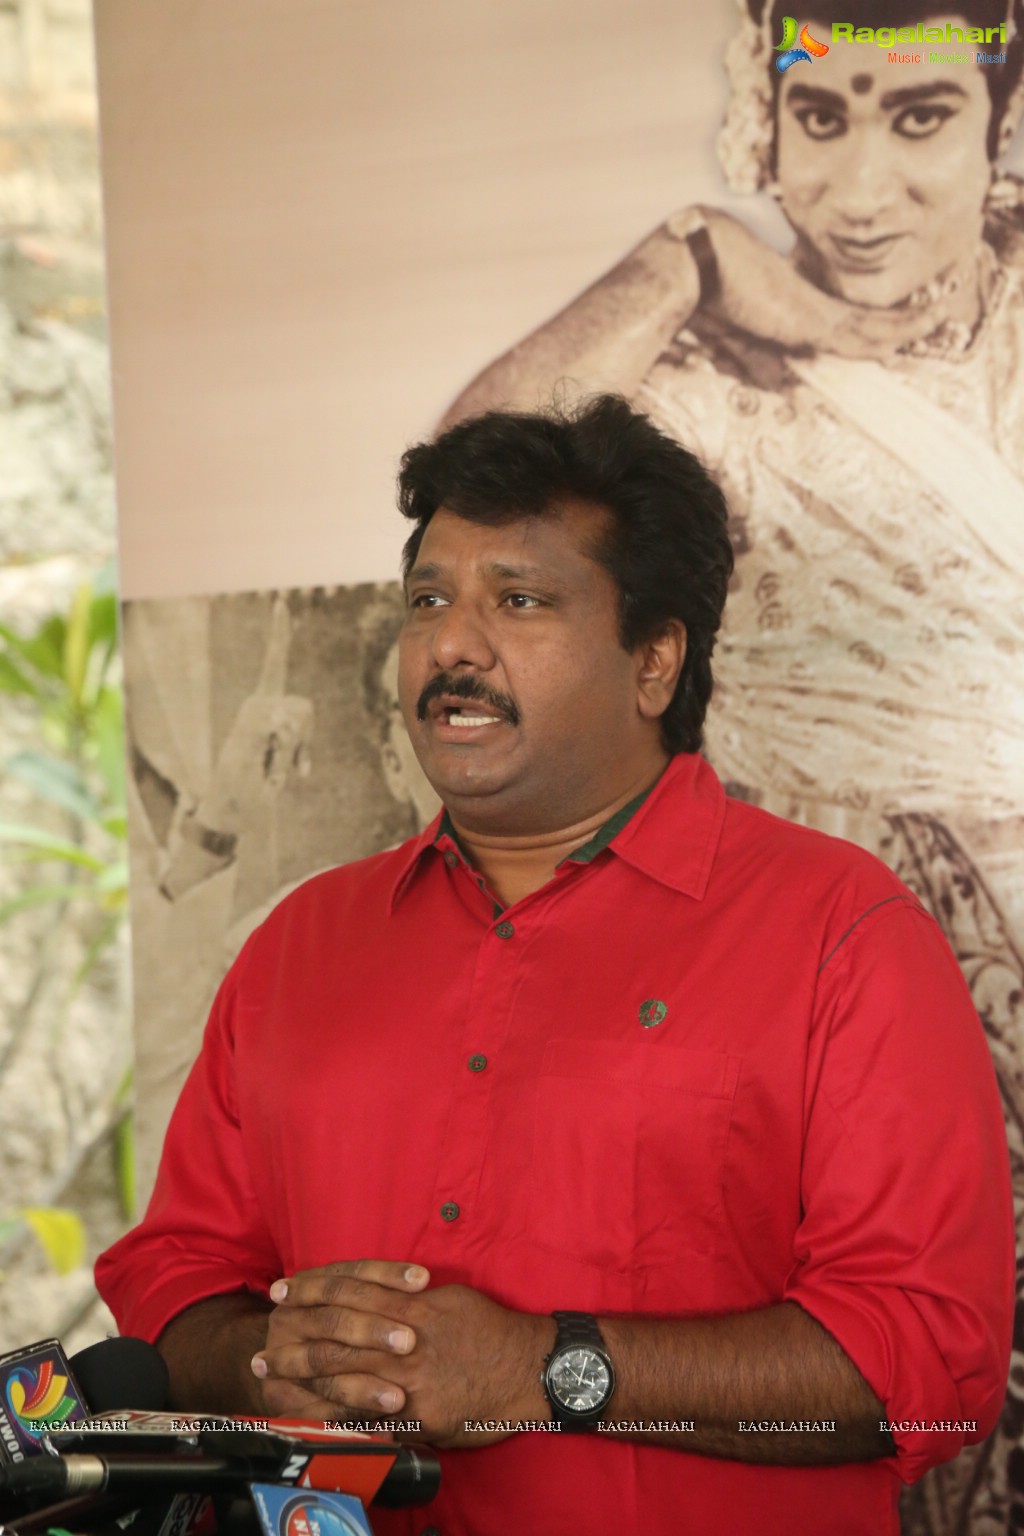 Tollywood Celebrities pay last respect to Mada Venkateswara Rao